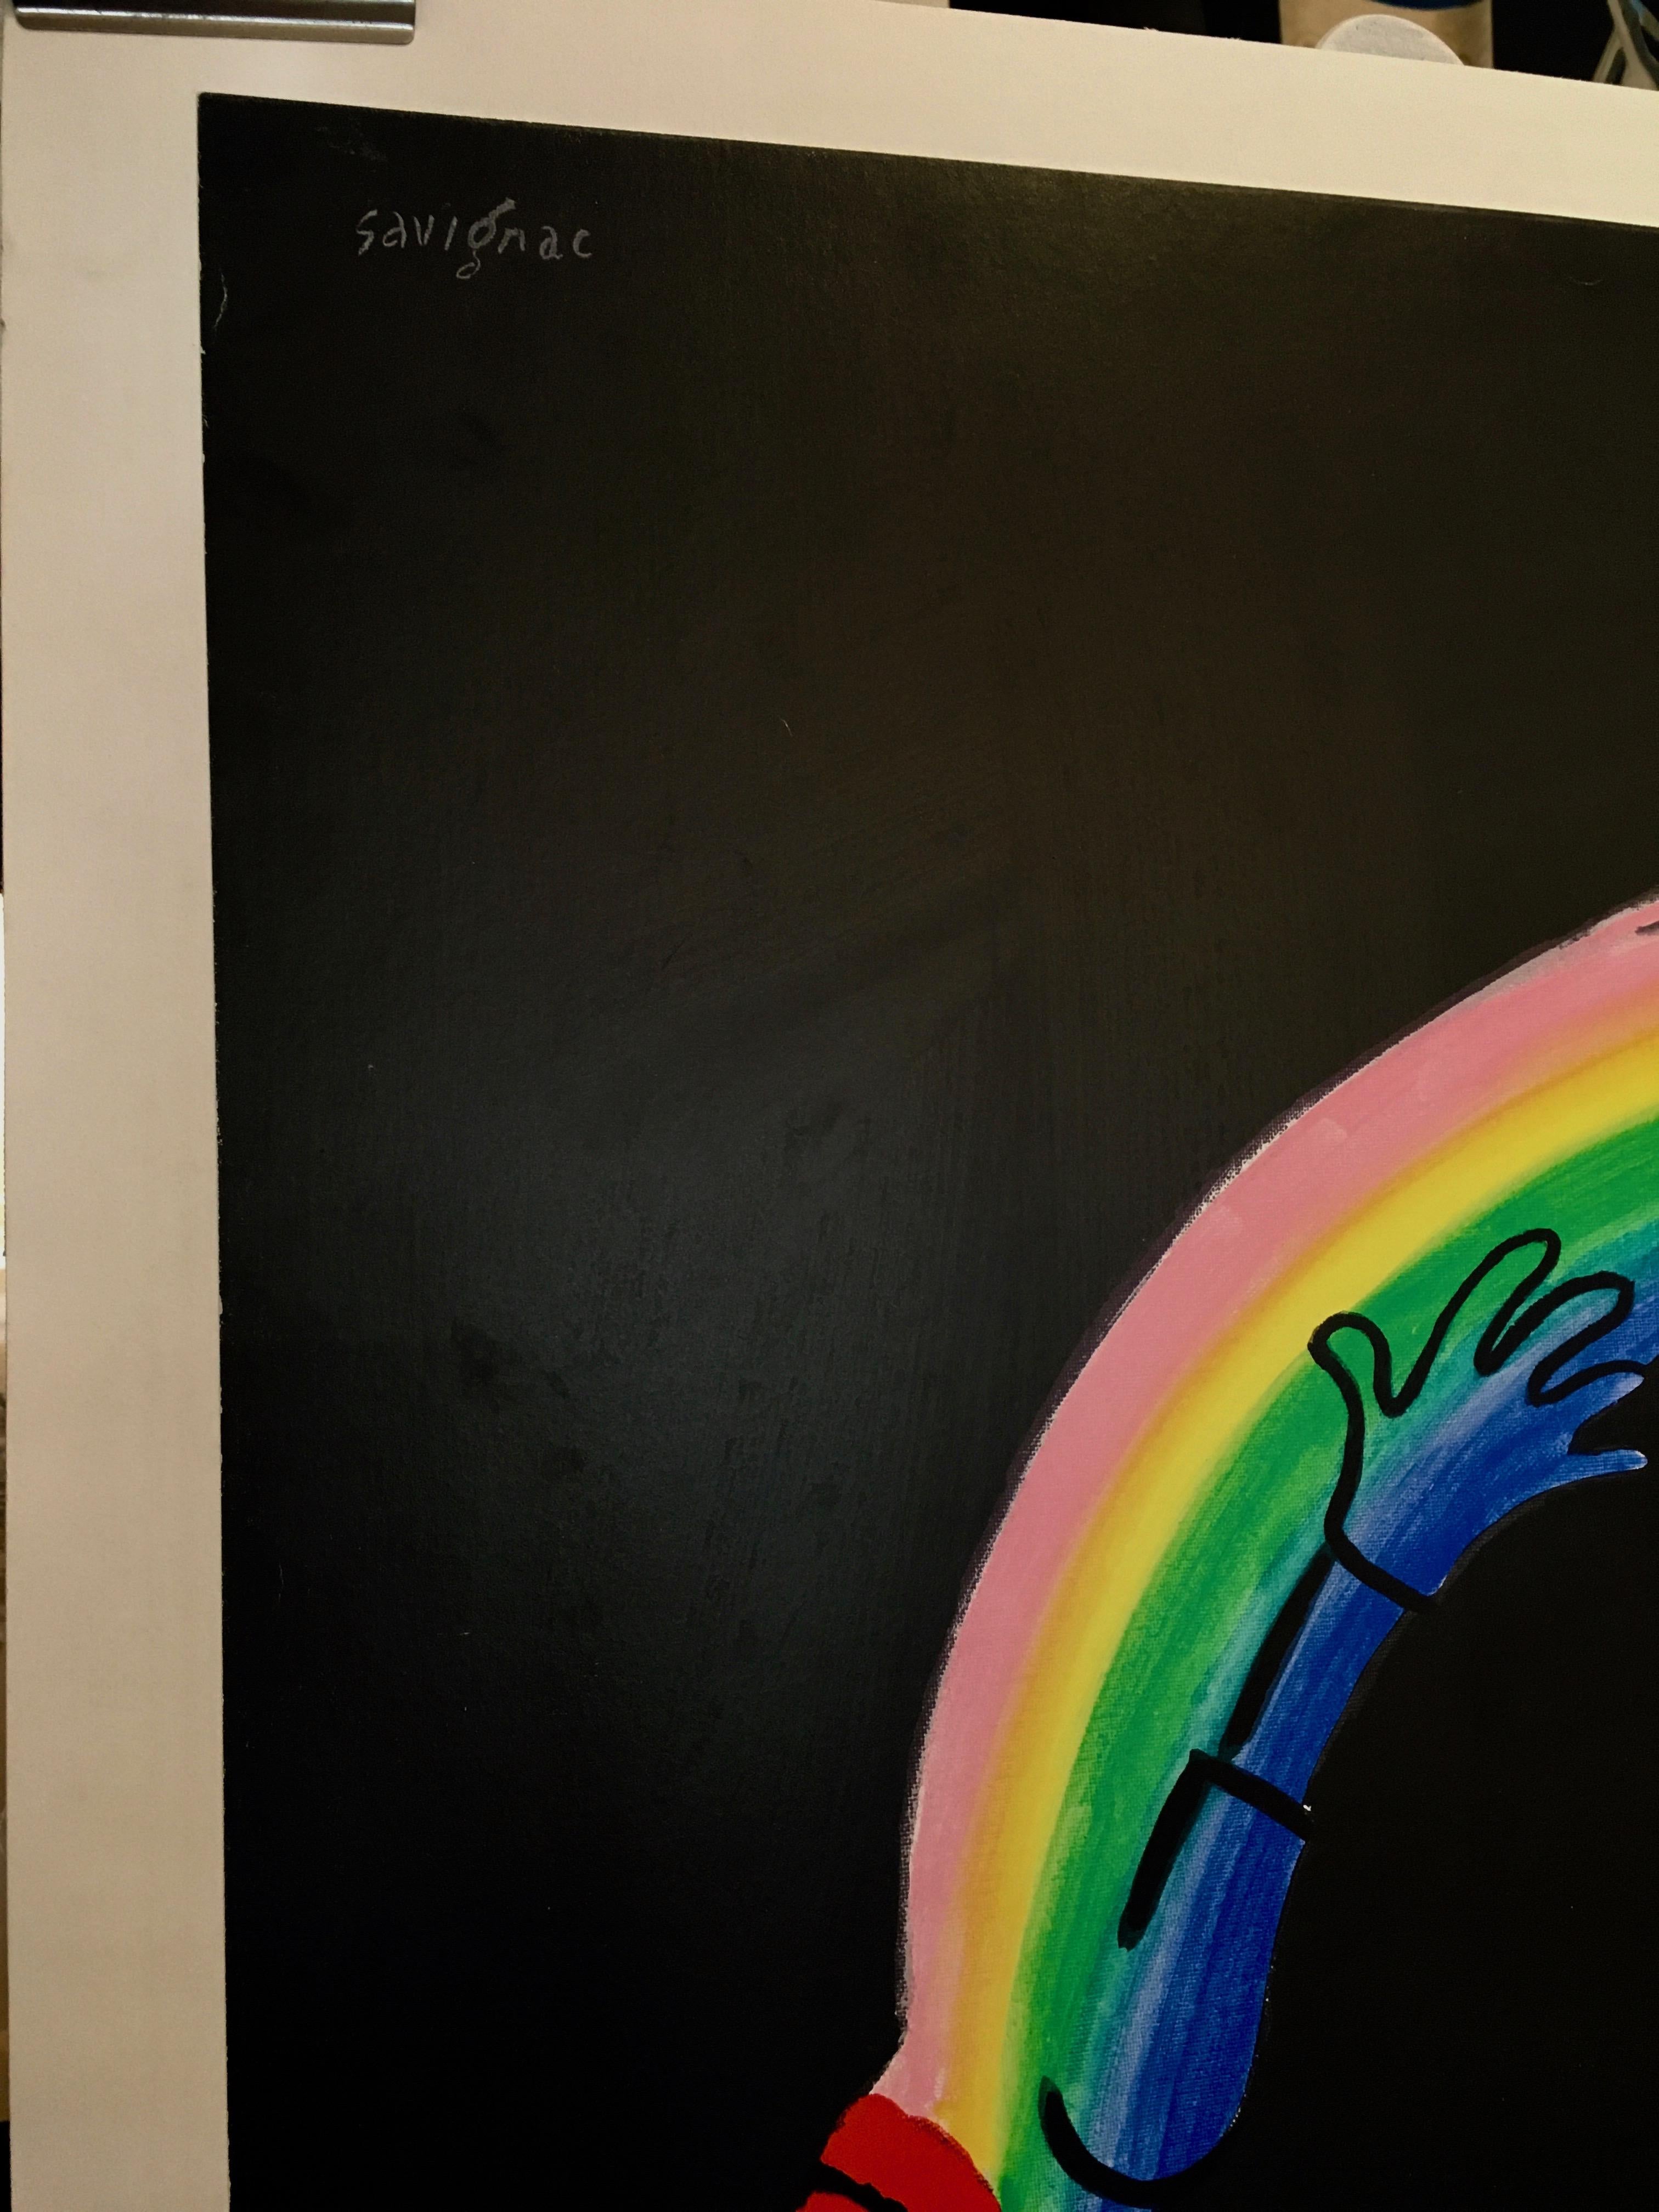 Raymond Savignac, 'Rainbow', affiche originale, 1970

Raymond Savignac, souvent abrégé en 